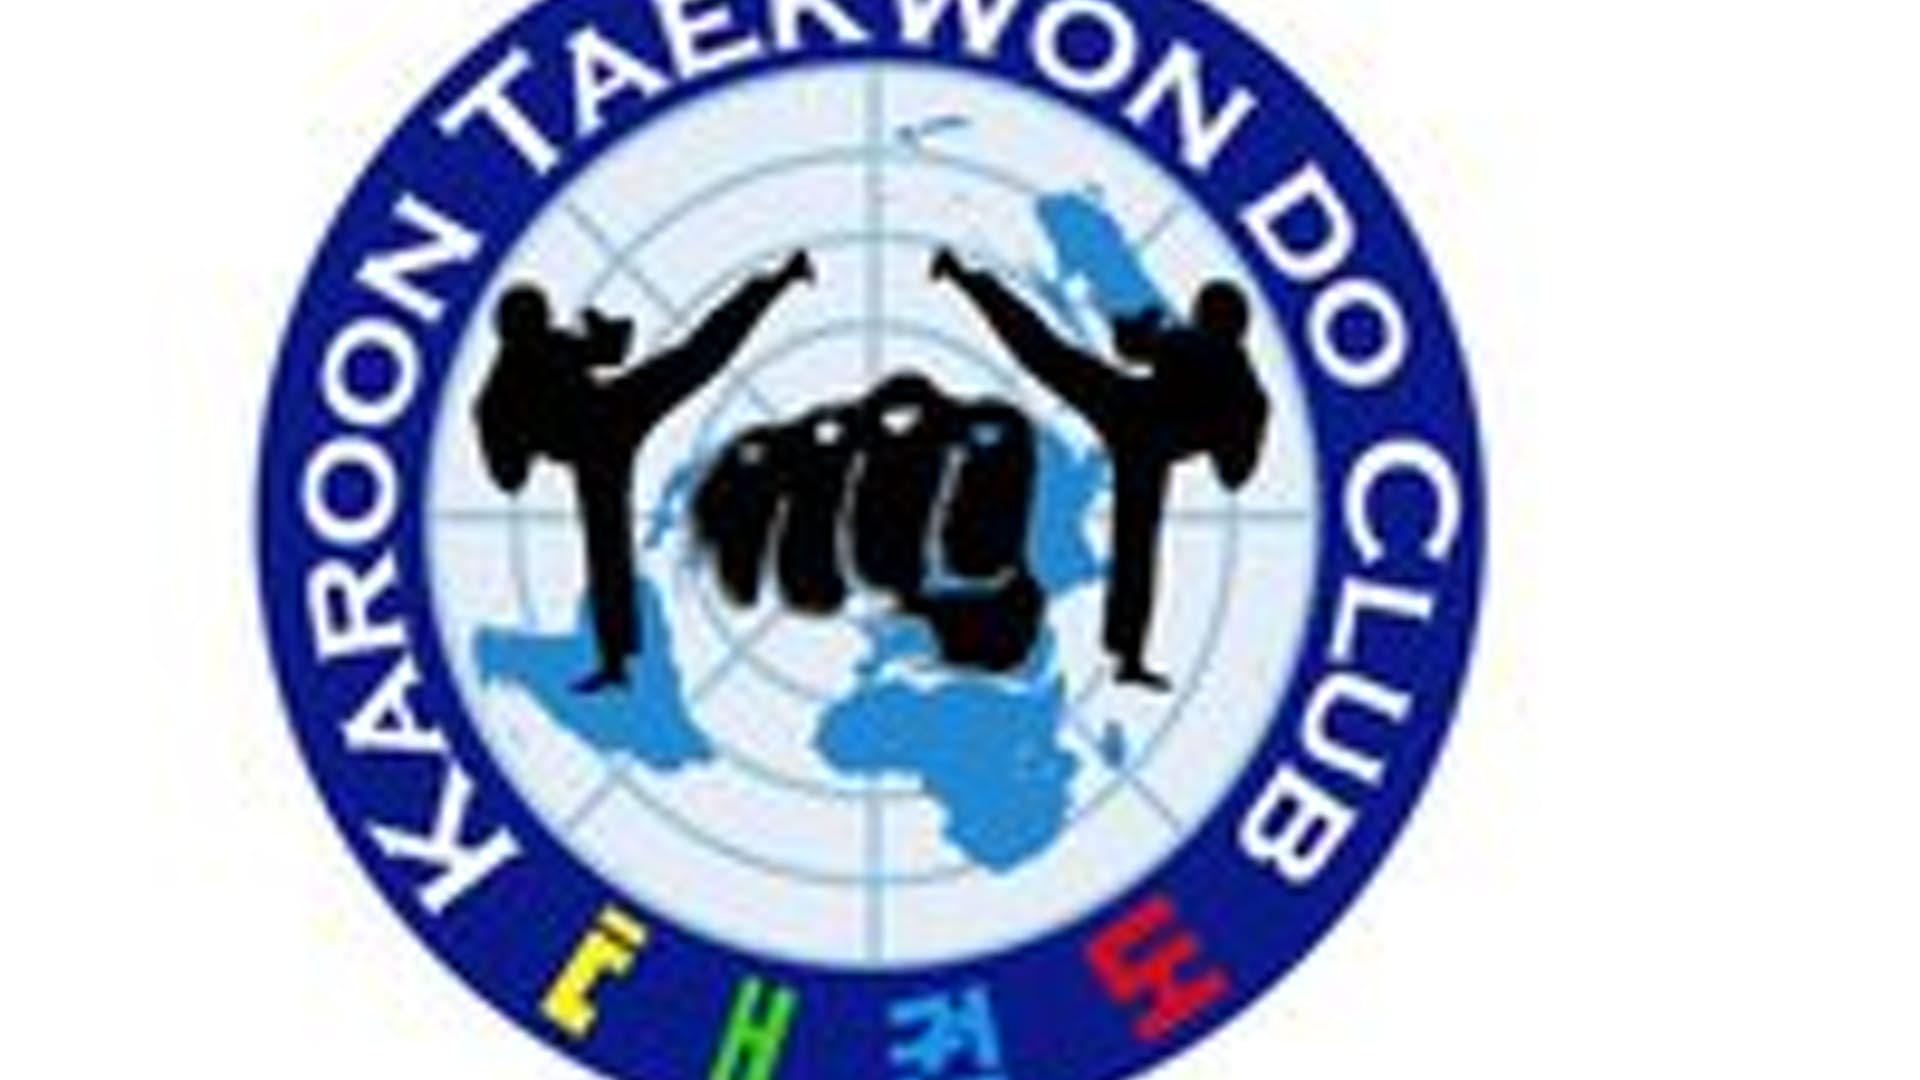 Karoon Taekwondo Club, The Meeting Room photo #0